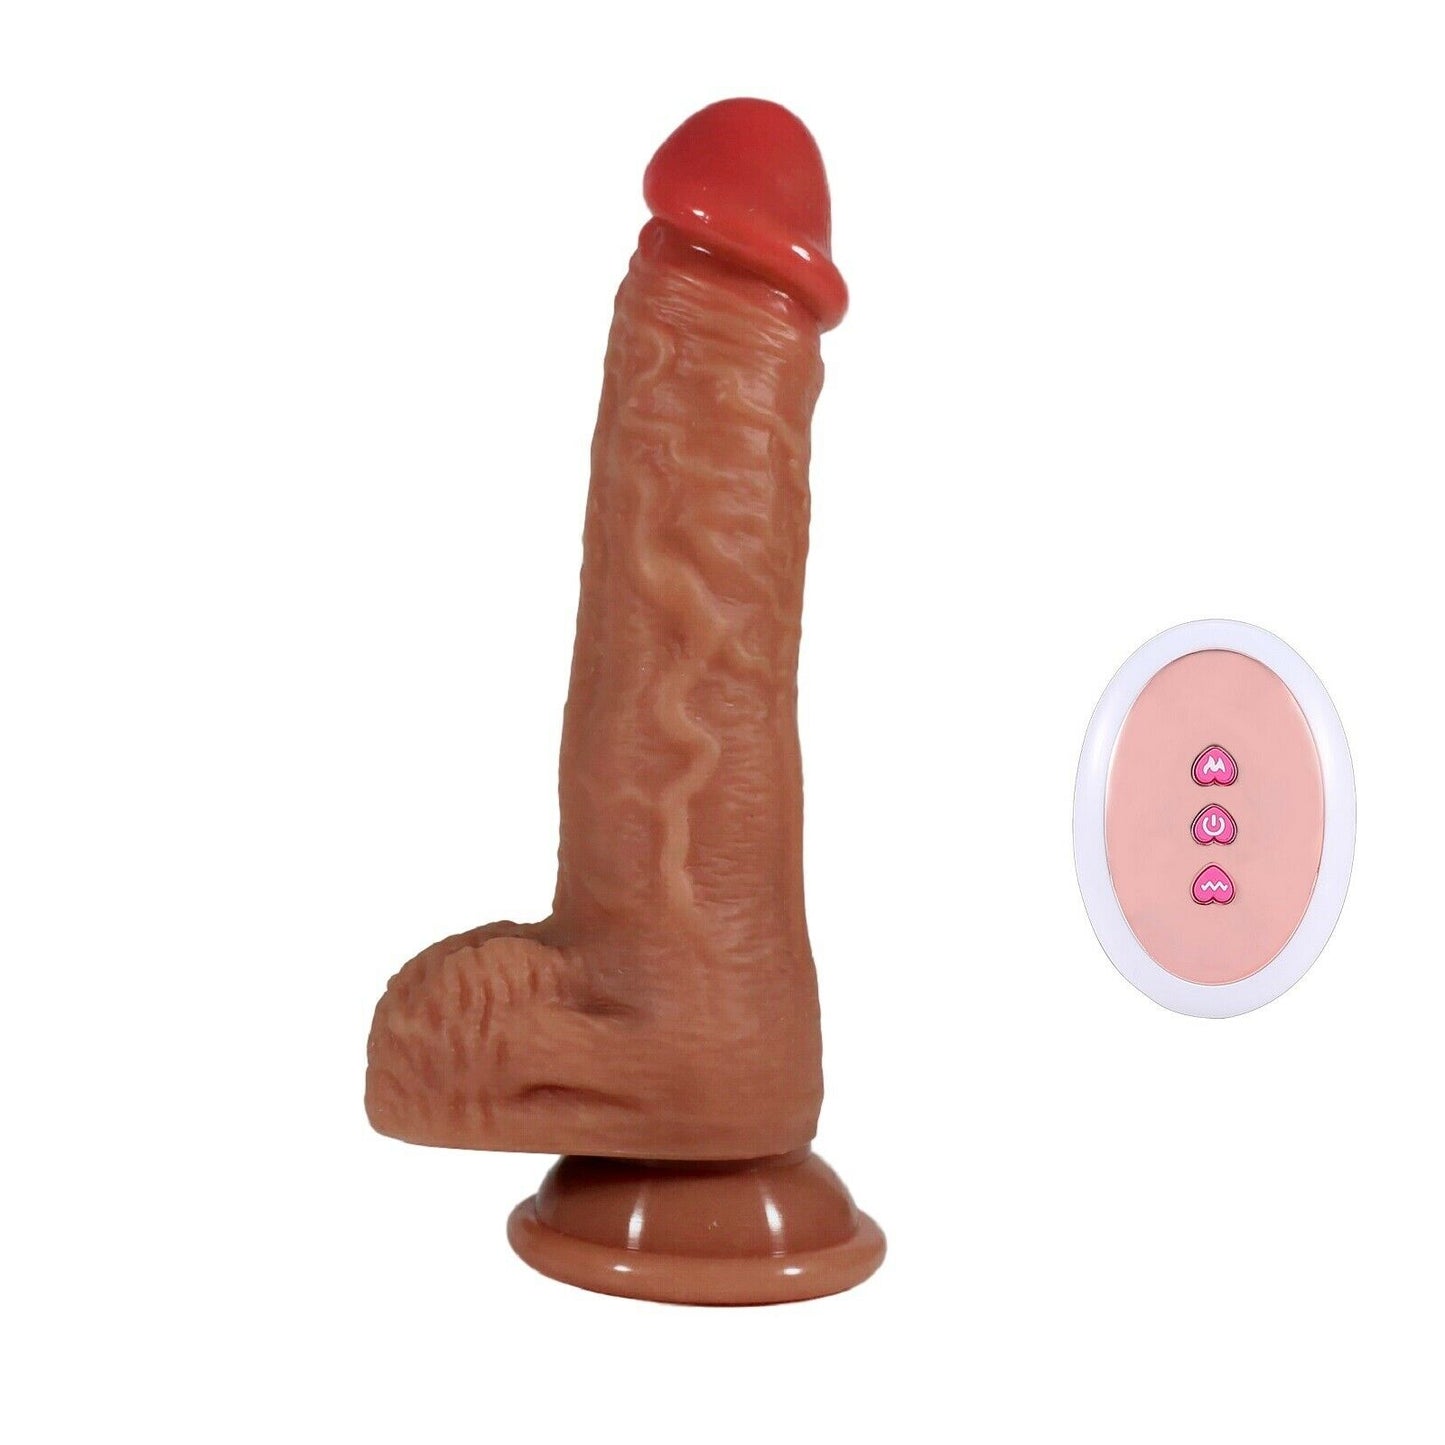 7.5" Realistic Dildo Vibrating Rotating Heating G spot Dong Cock Vibrator Sex Toy